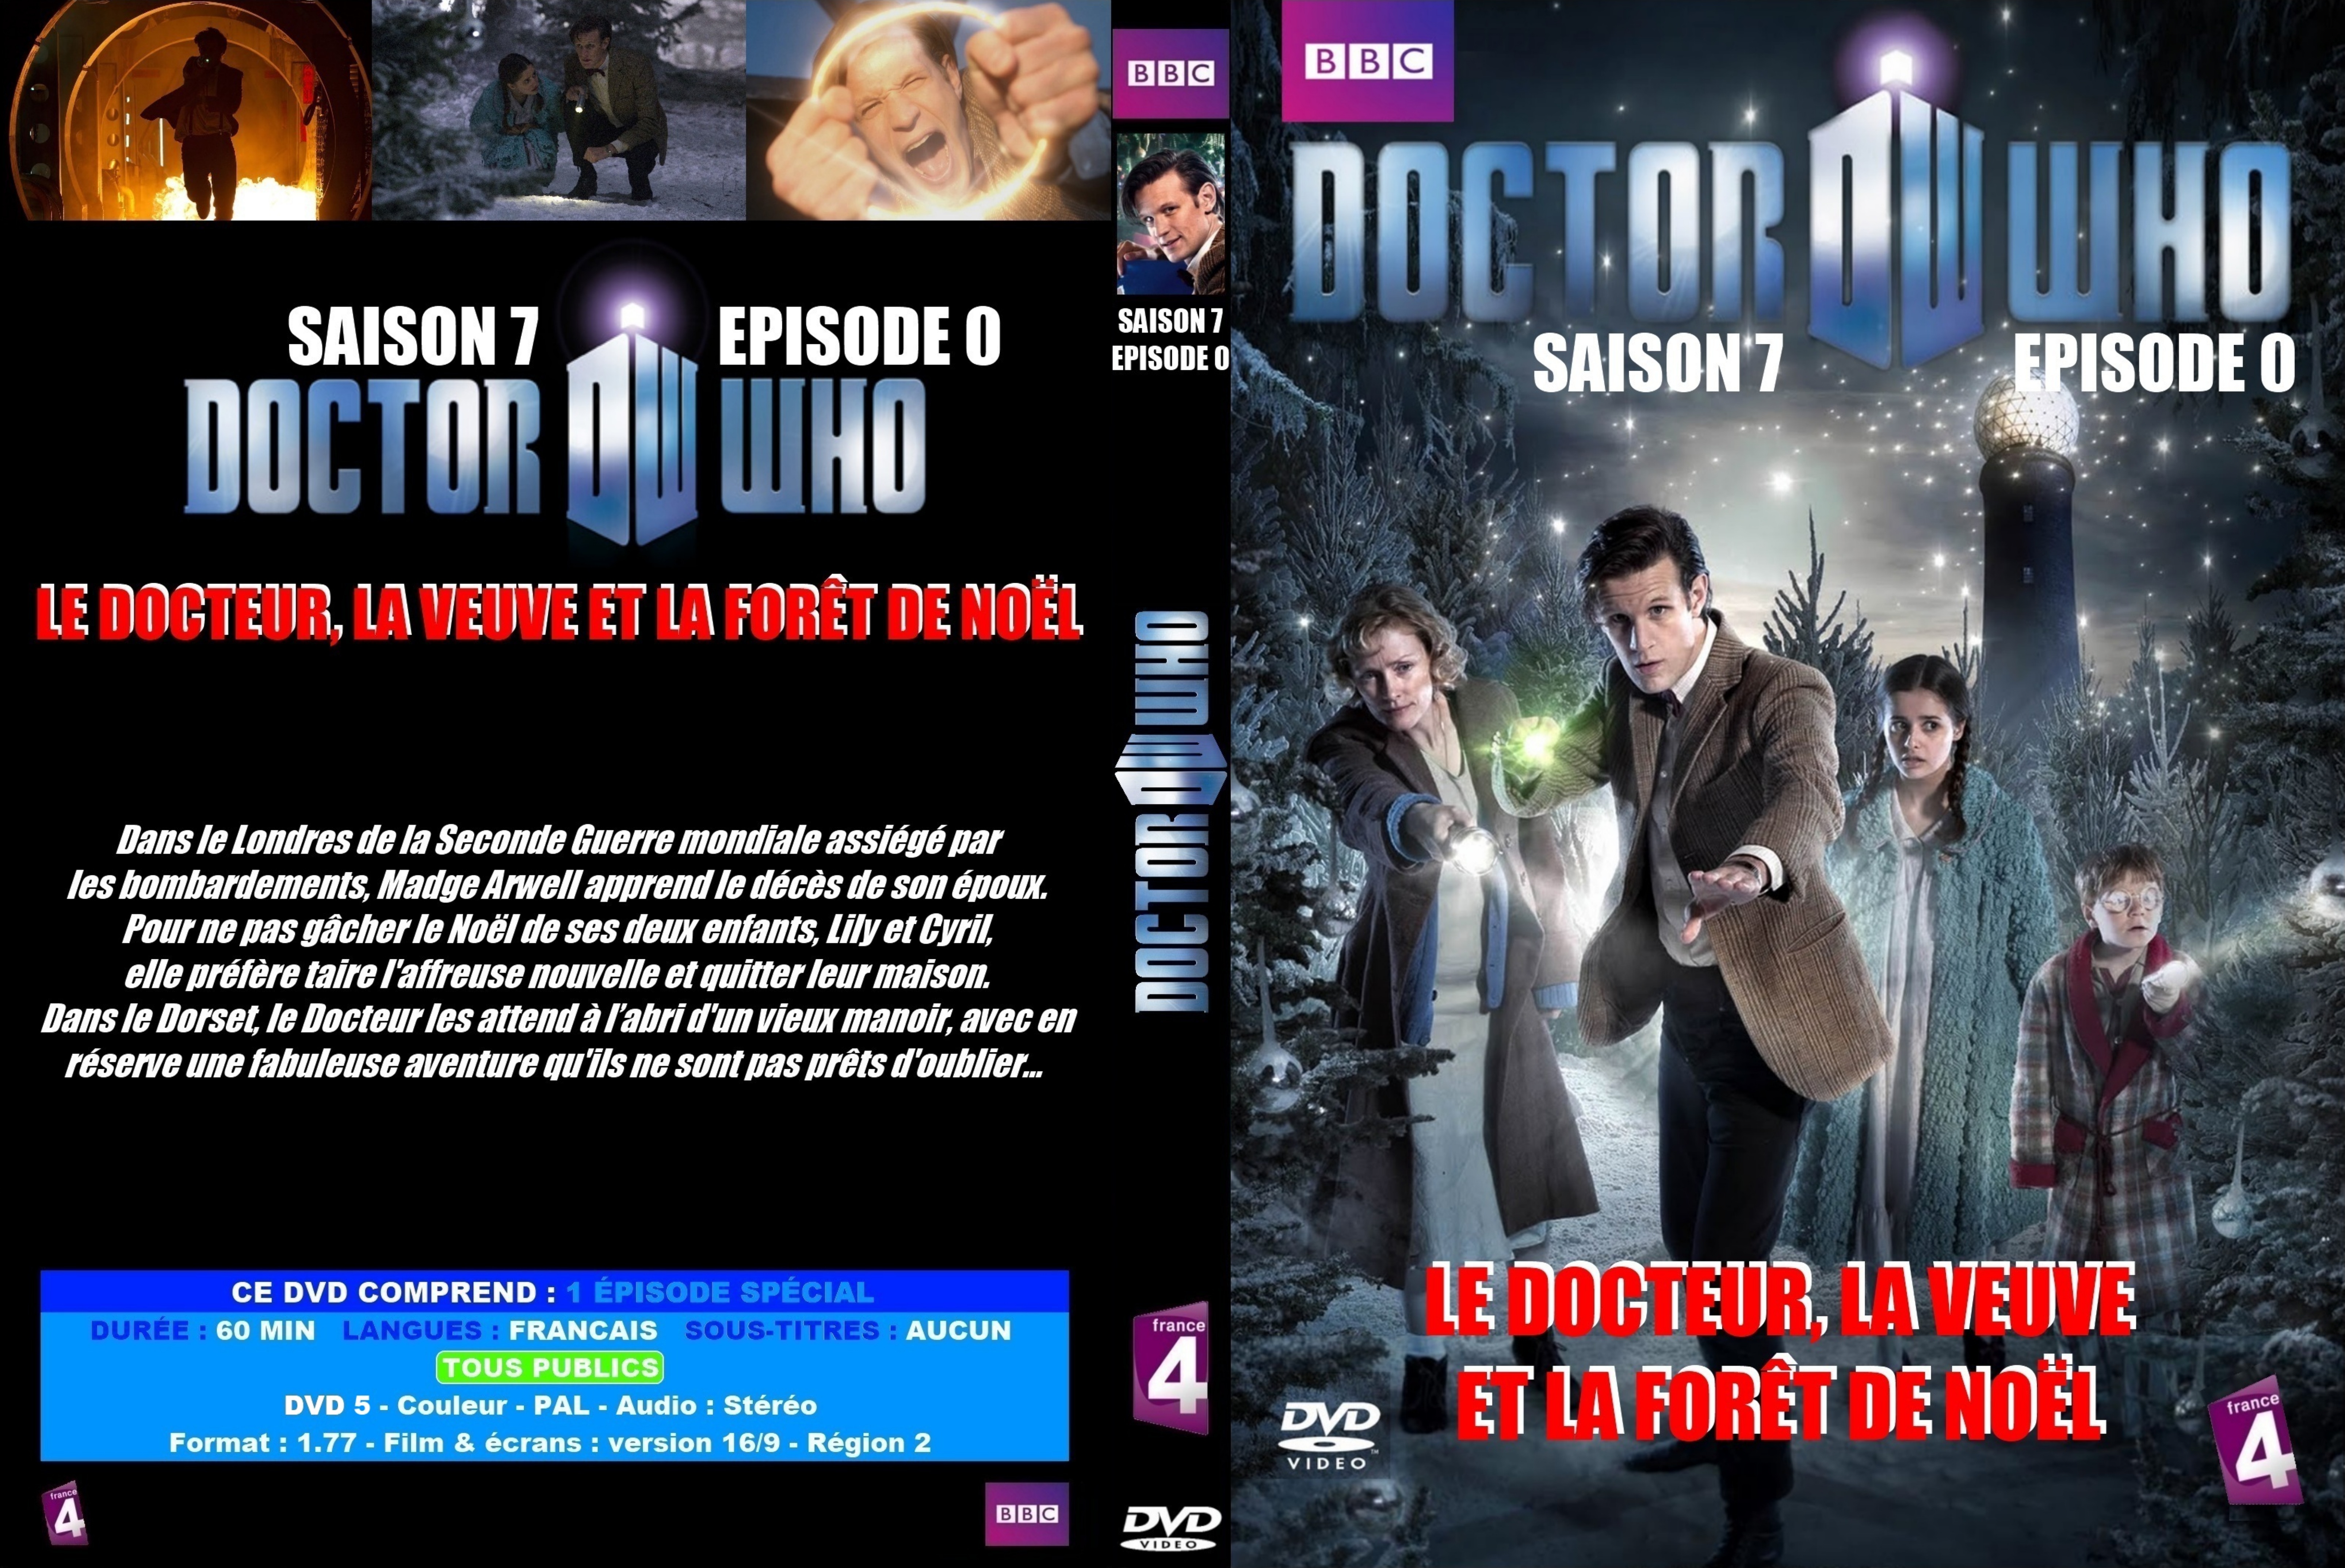 Jaquette DVD Doctor Who Saison 7 Episode 0 custom v2